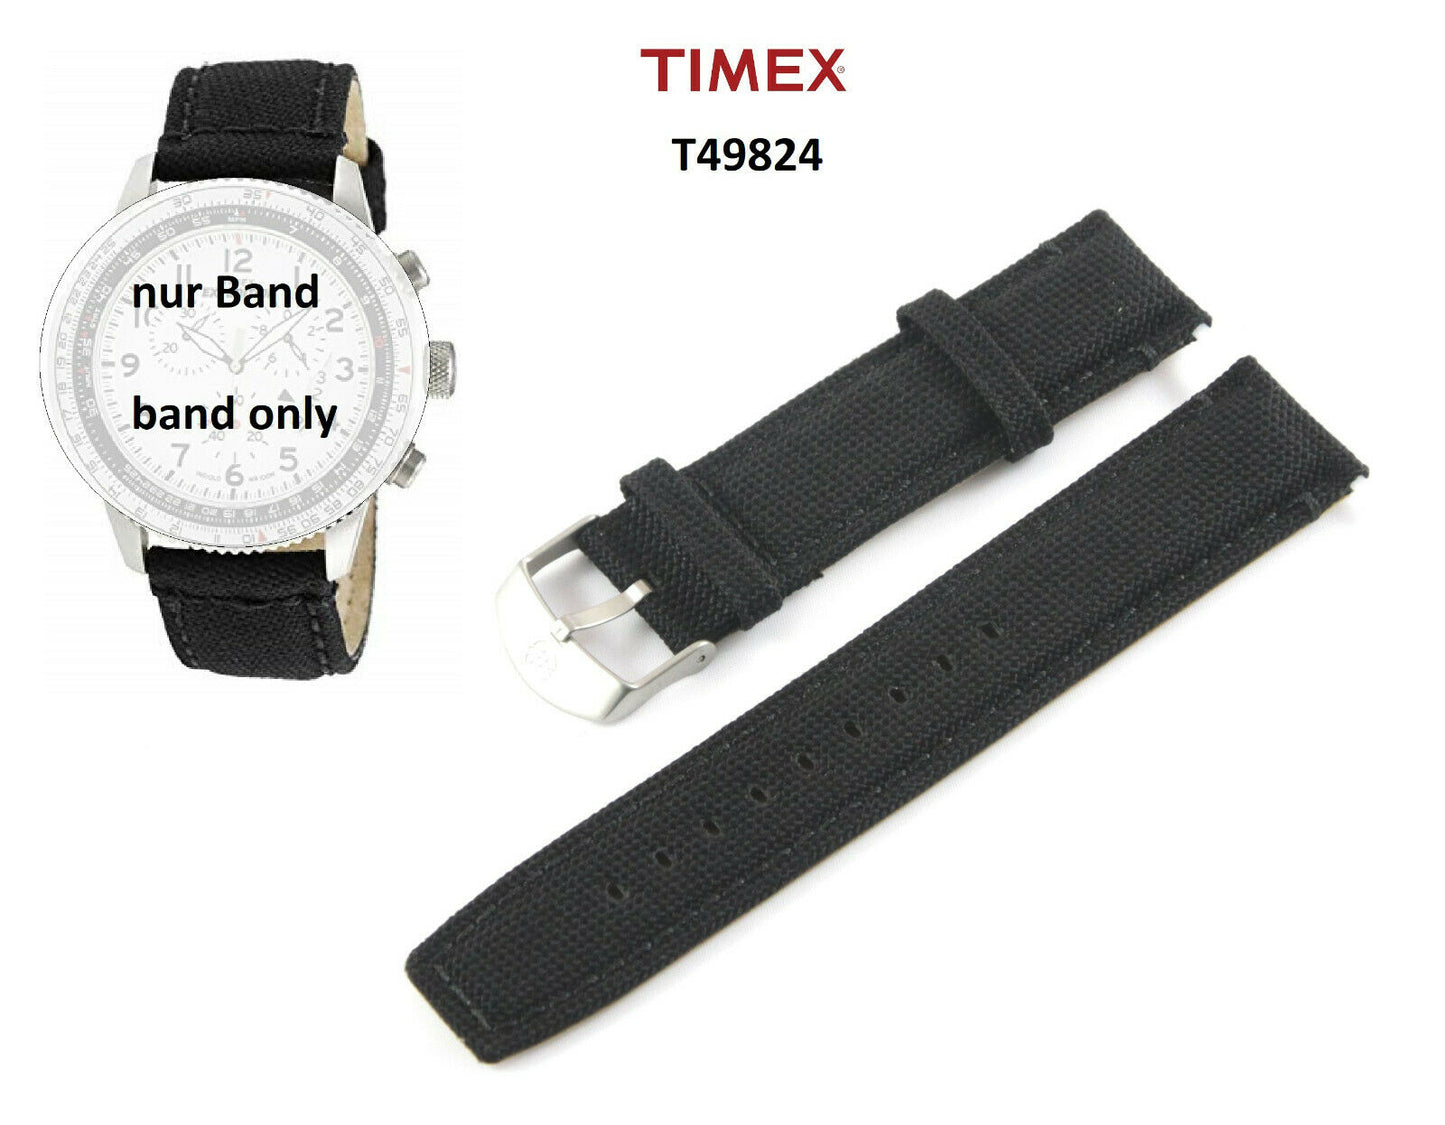 Timex Ersatzarmband T49824 Military Chrono Original Ersatzband - T49823 T2P286